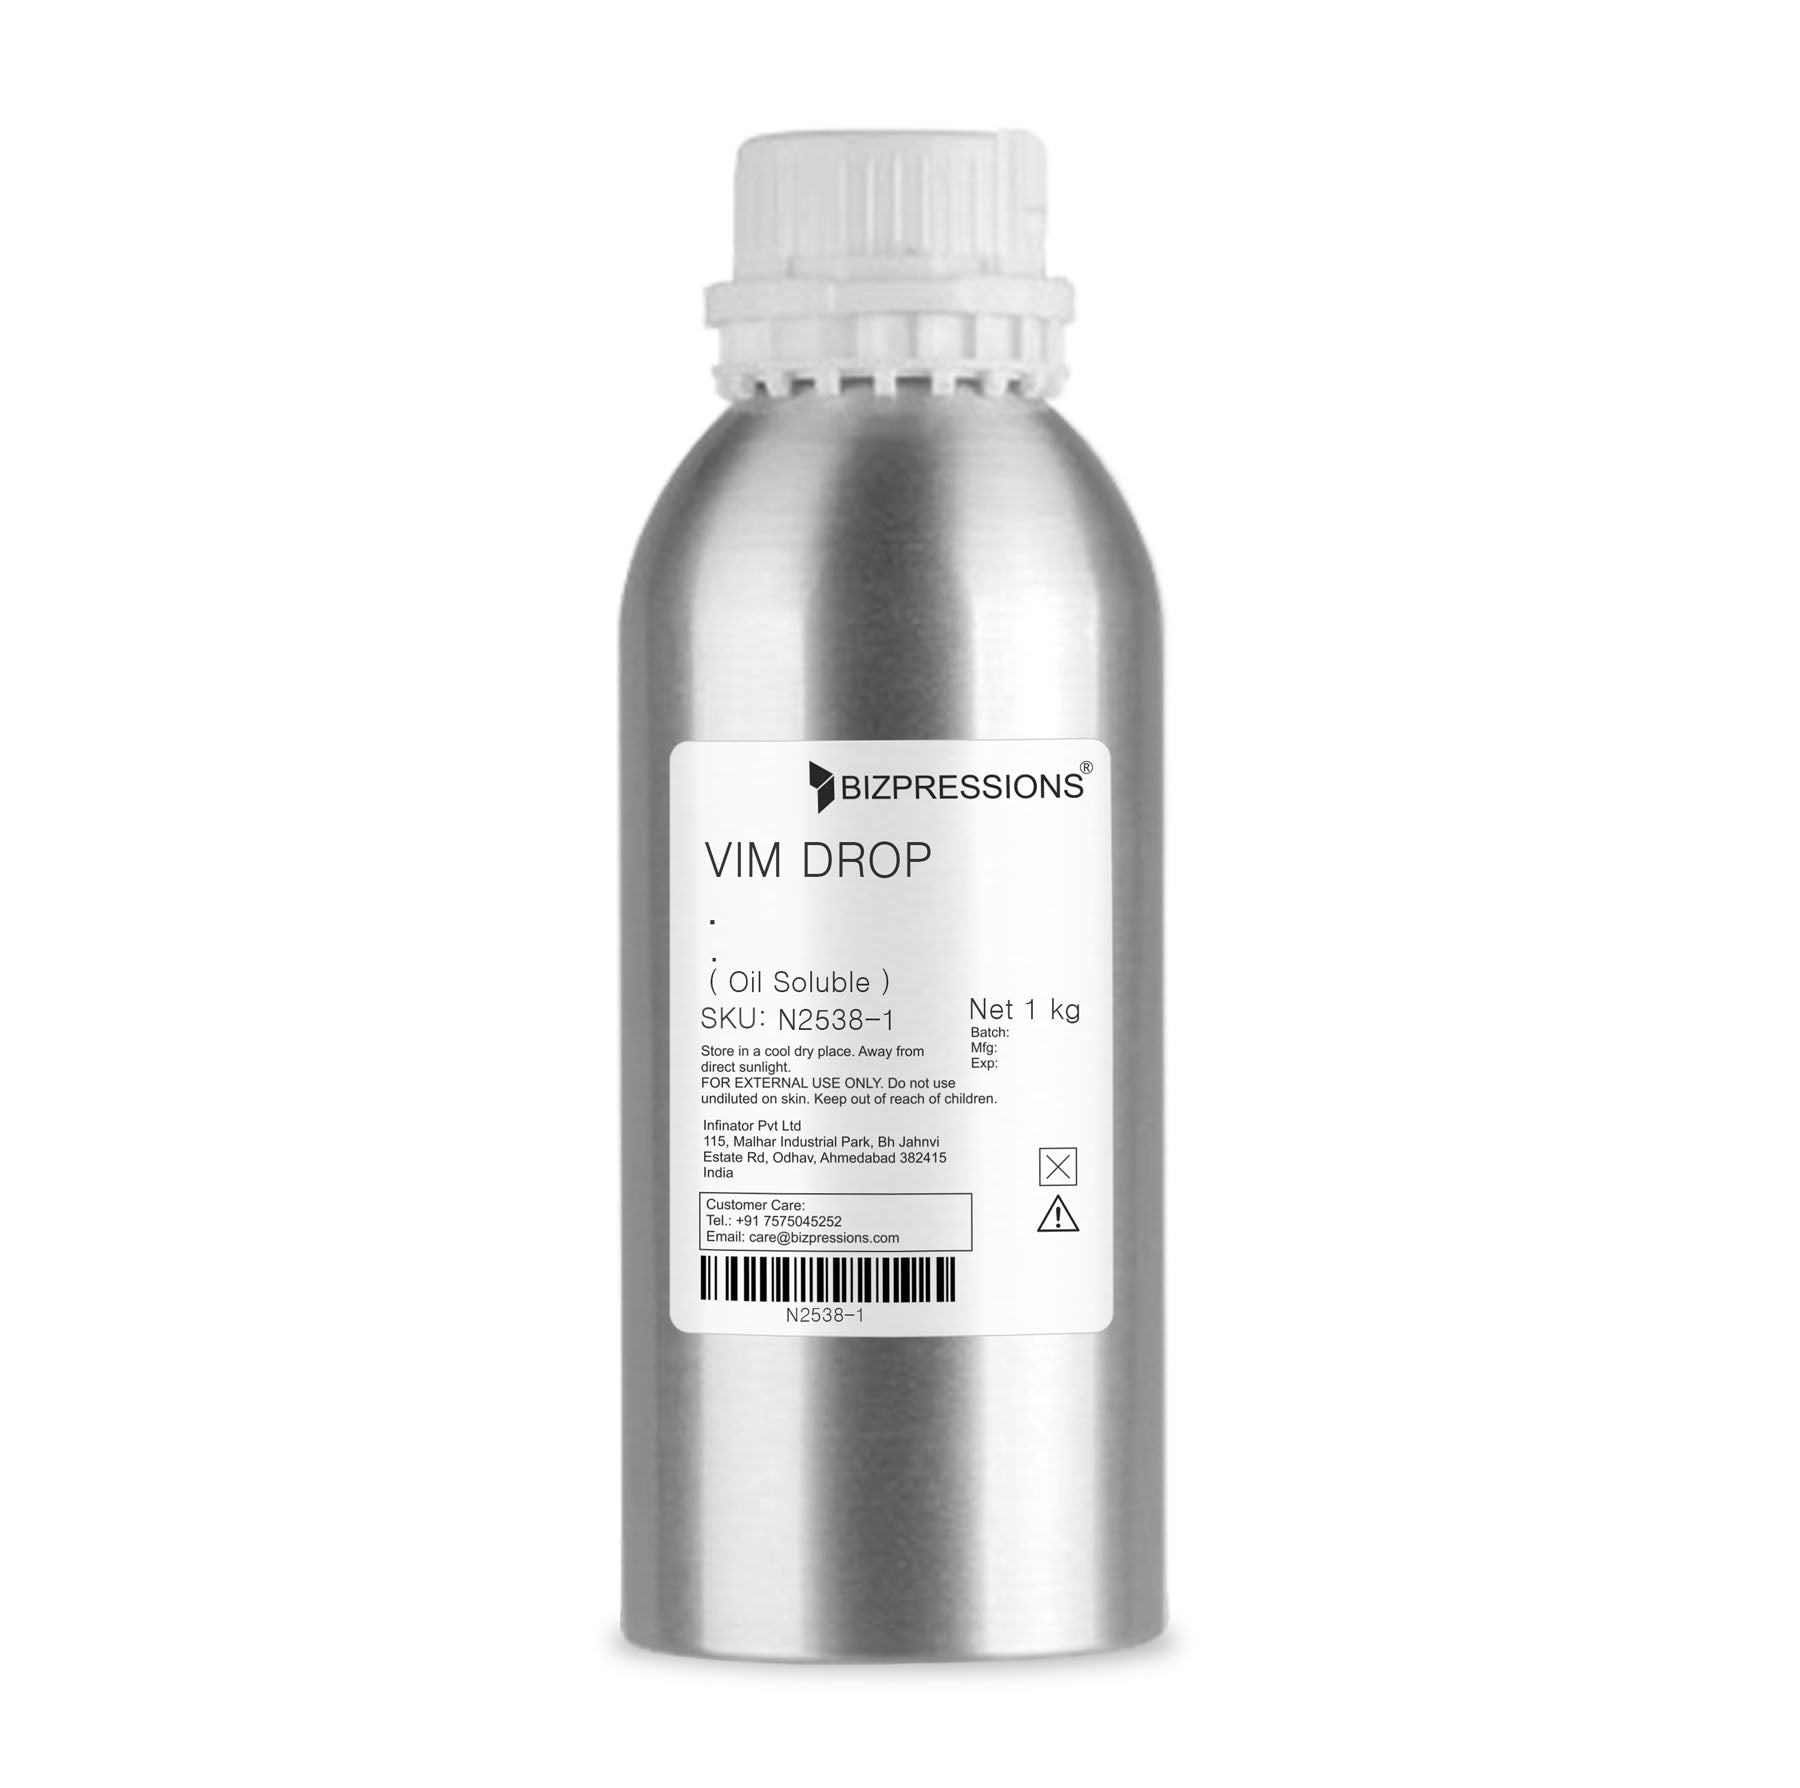 VIM DROP - Fragrance ( Oil Soluble ) - 1 kg